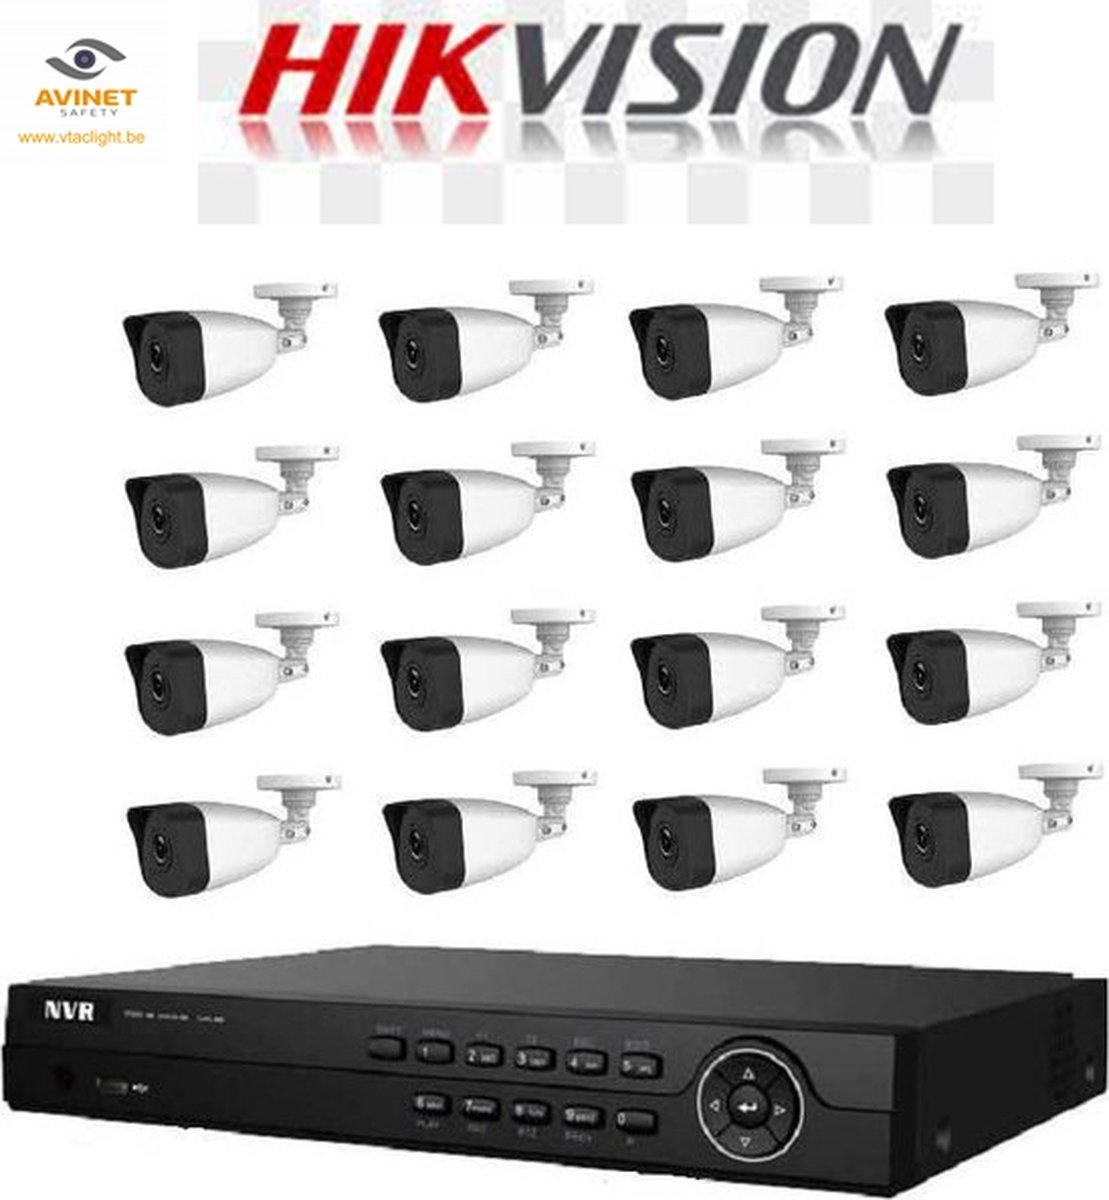 Hiwatch van HIKVISION 4 MP IP-beveiligingscamerasysteem met 16 CH Poe HD NVR en 16 x 4 megapixels 2688 x 1520 weerbestendige CCTV-bulletcamera, Power Over Ethernet Kit